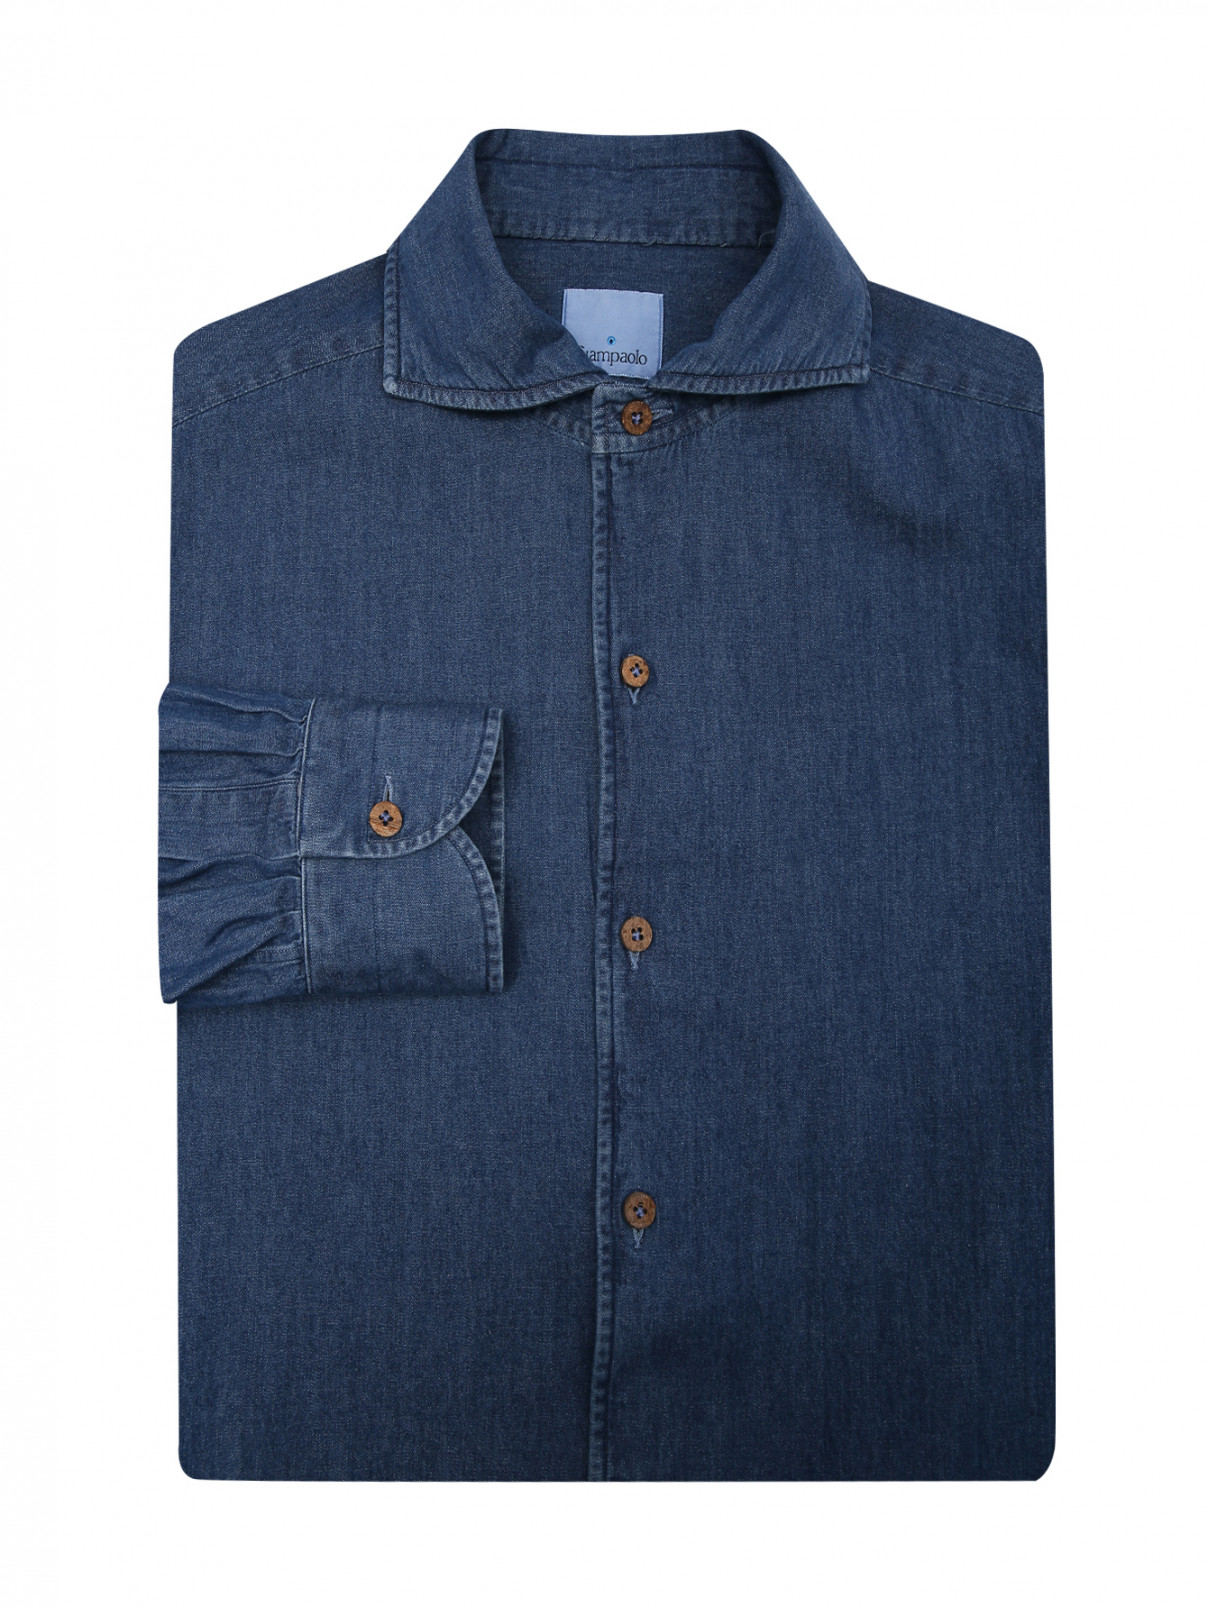 Рубашка из хлопка на пуговицах Giampaolo  –  Общий вид  – Цвет:  Синий